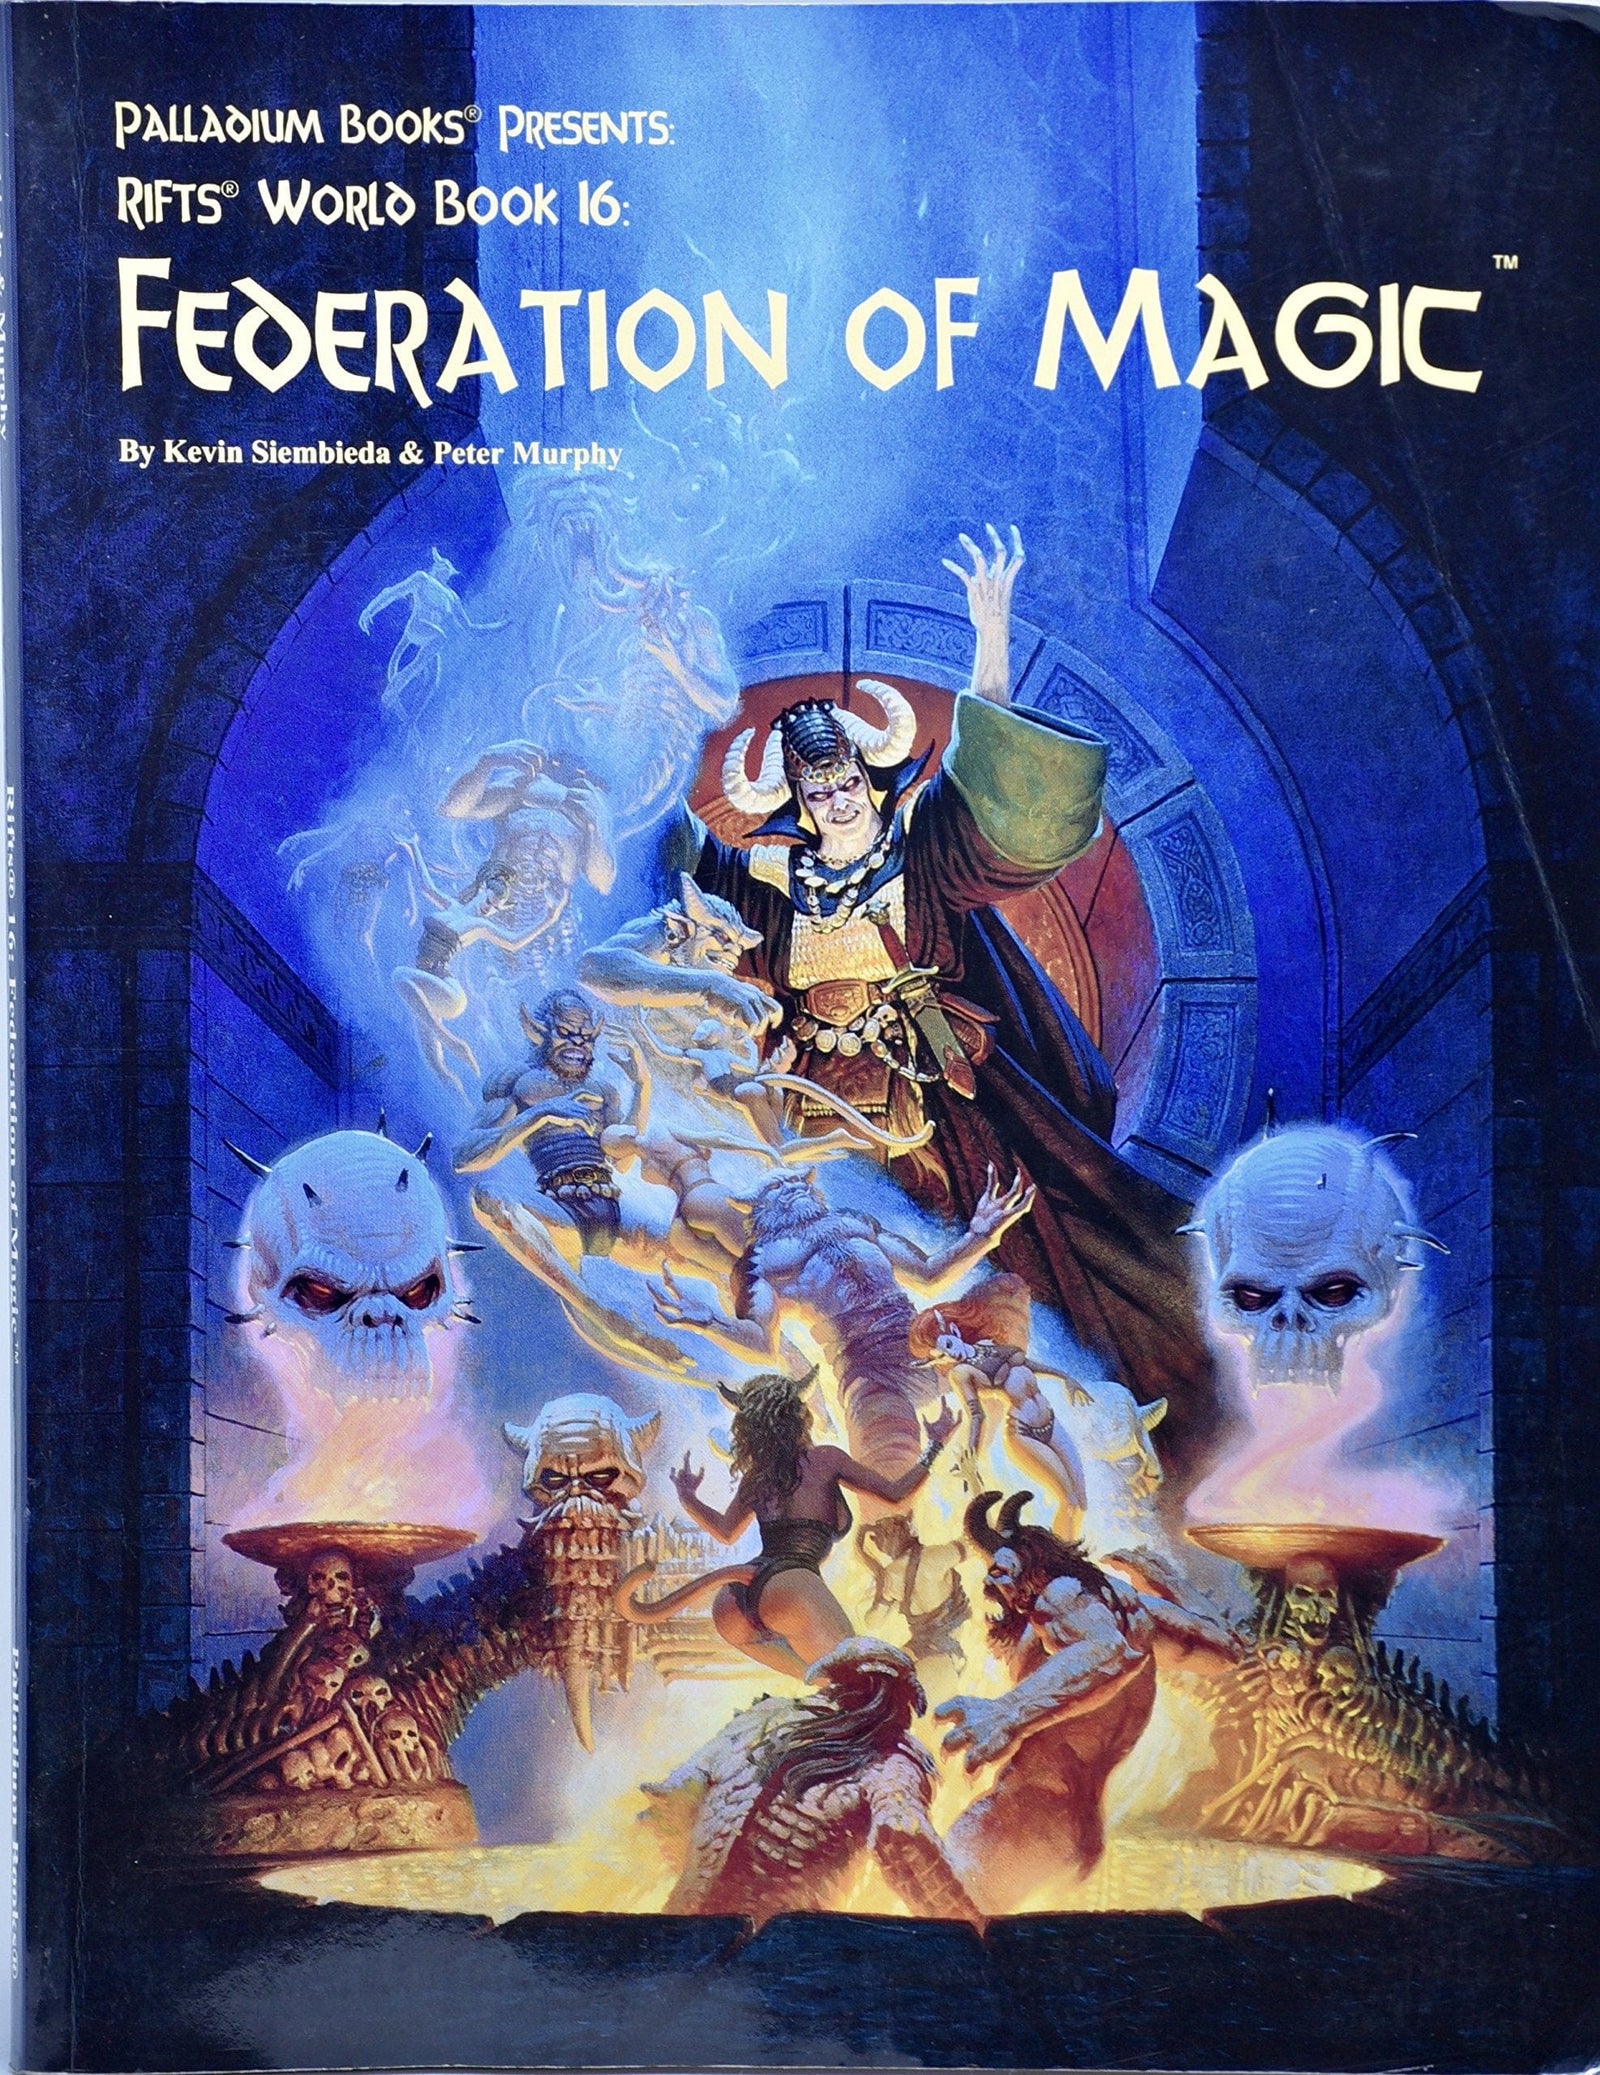 Palladium Books Role Playing Games Palladium Books Rifts RPG: World Book 16 Federation of Magic